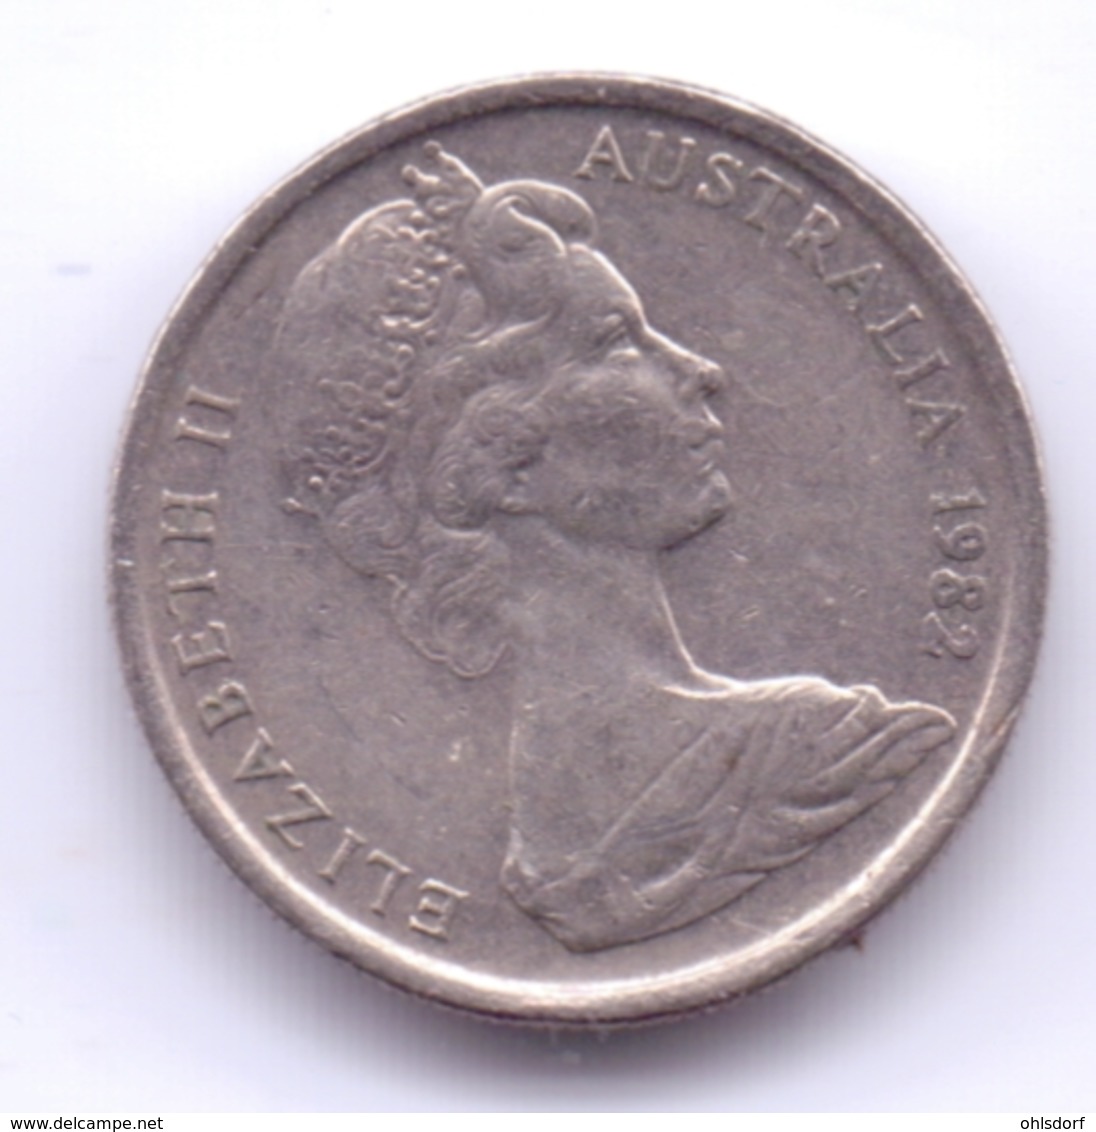 AUSTRALIA 1982: 5 Cents, KM 64 - Cent